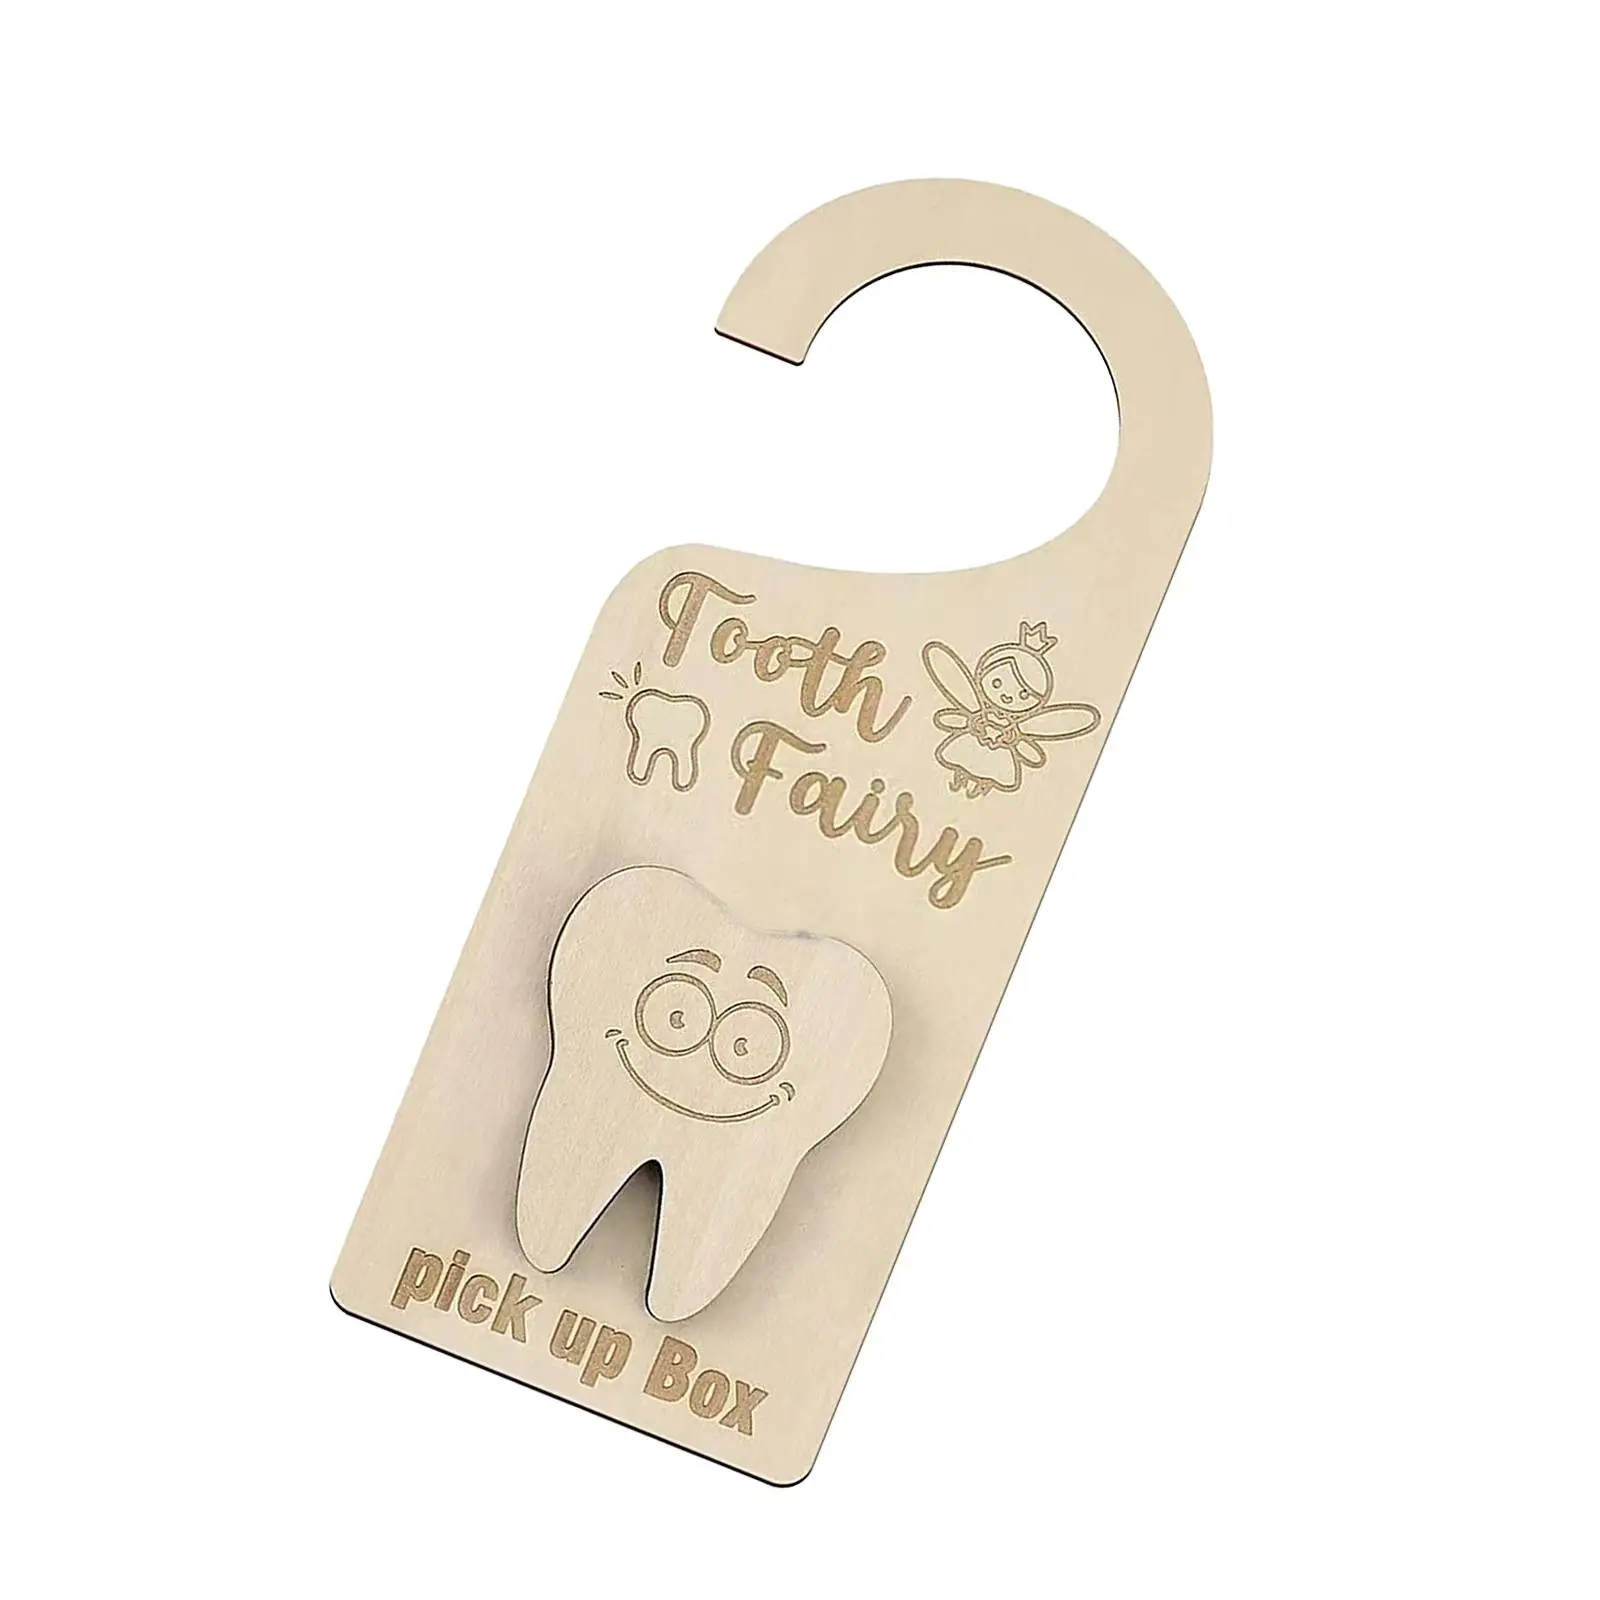 Wood Tooth Fairy Door Hanger Keepsake Organizer Case Encourage Gift Tooth Fairy Pick up Box for Toddlers Children Girls Boys